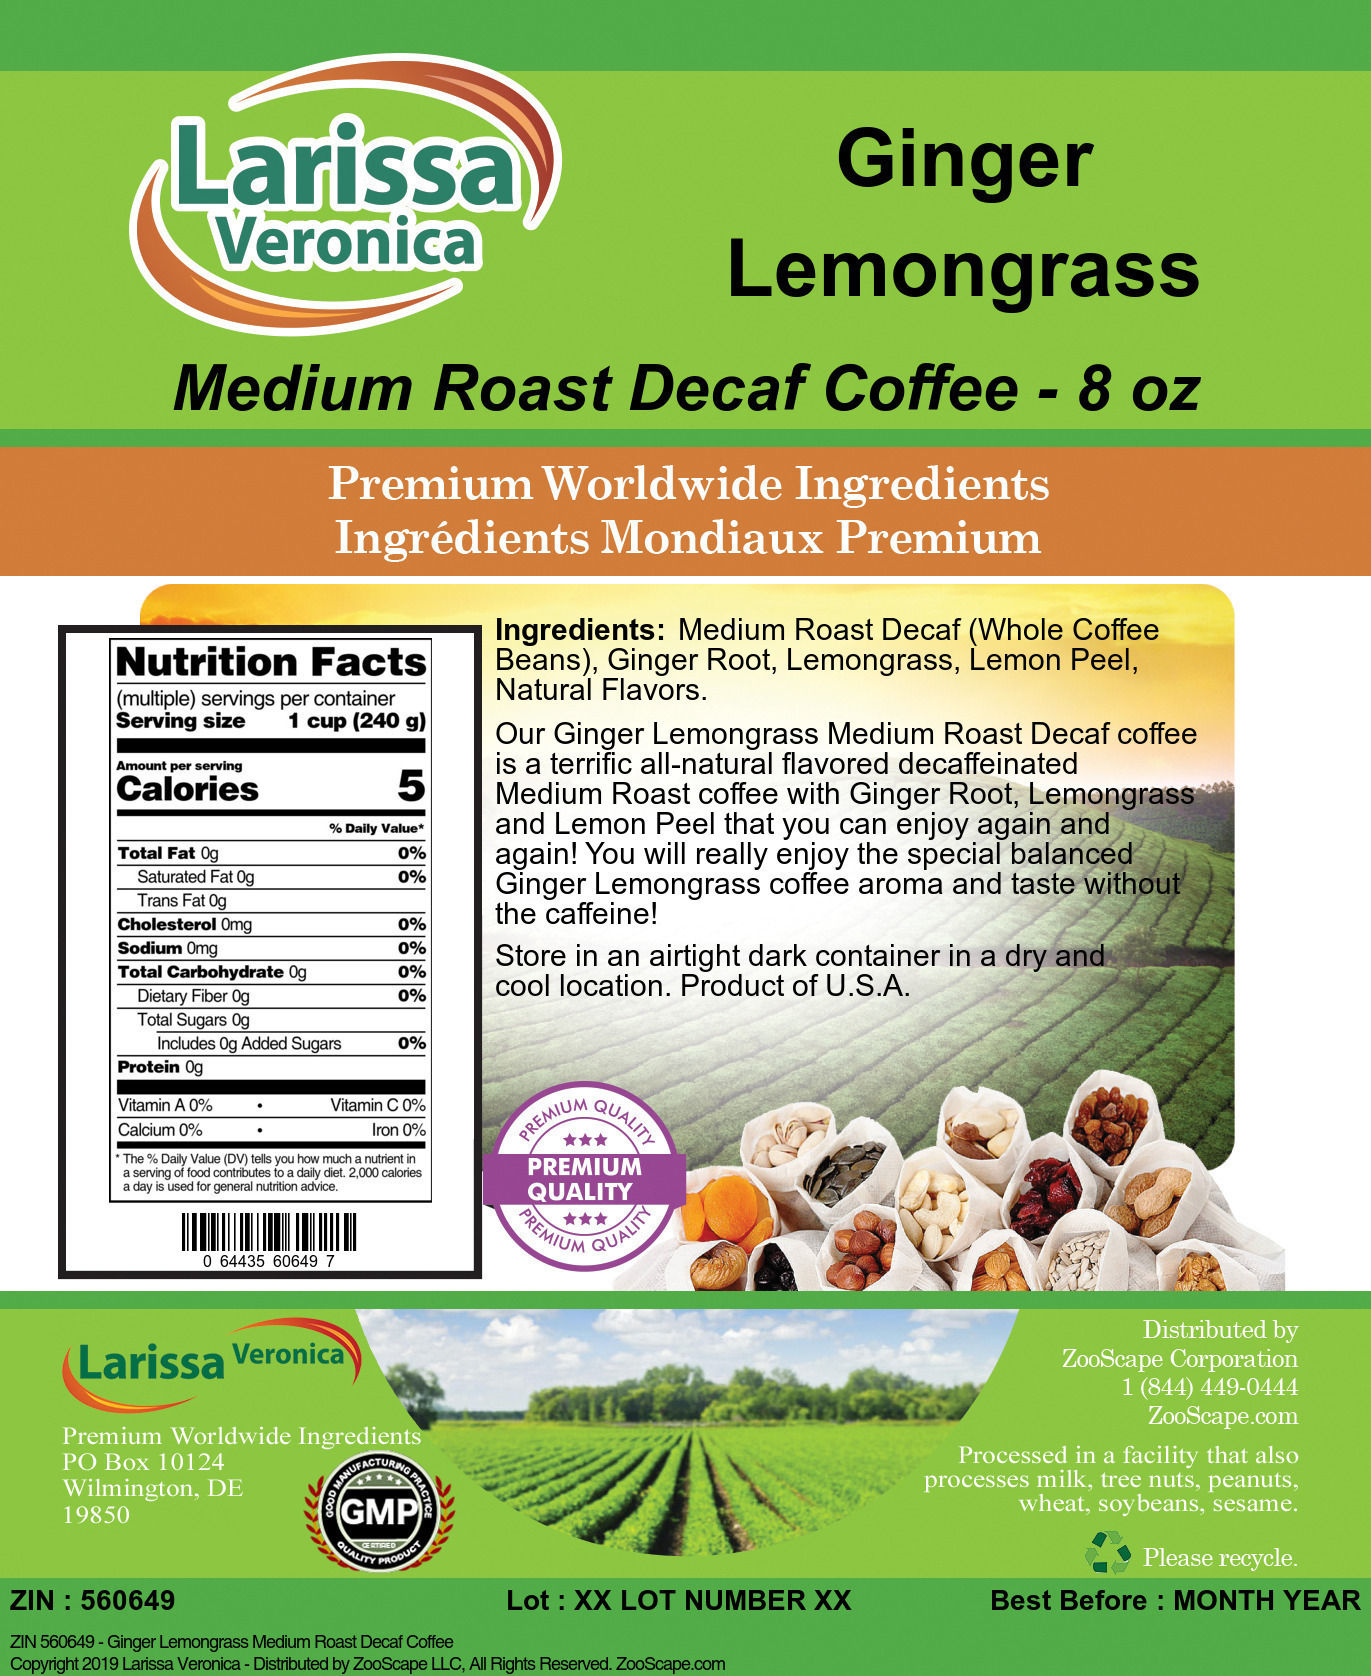 Ginger Lemongrass Medium Roast Decaf Coffee - Label